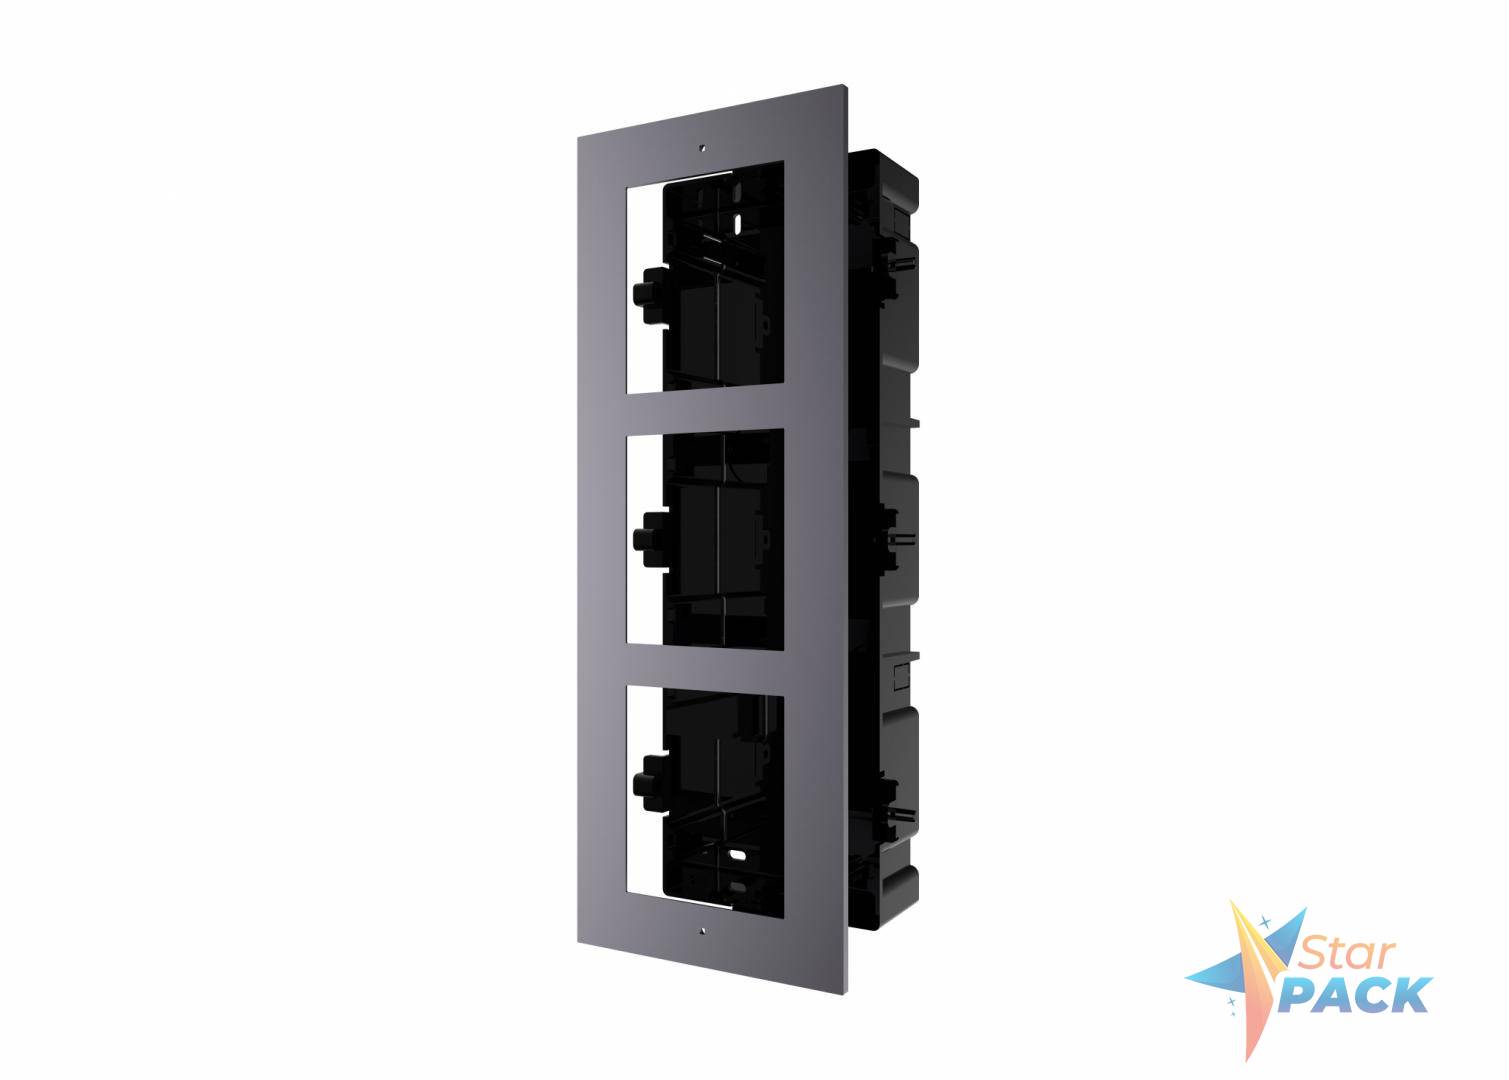 PANOU frontal HIKVISION pt 3 module videointerfon modular Hikvision , montare incastrata, aluminiu, doza de plastic inclusa;